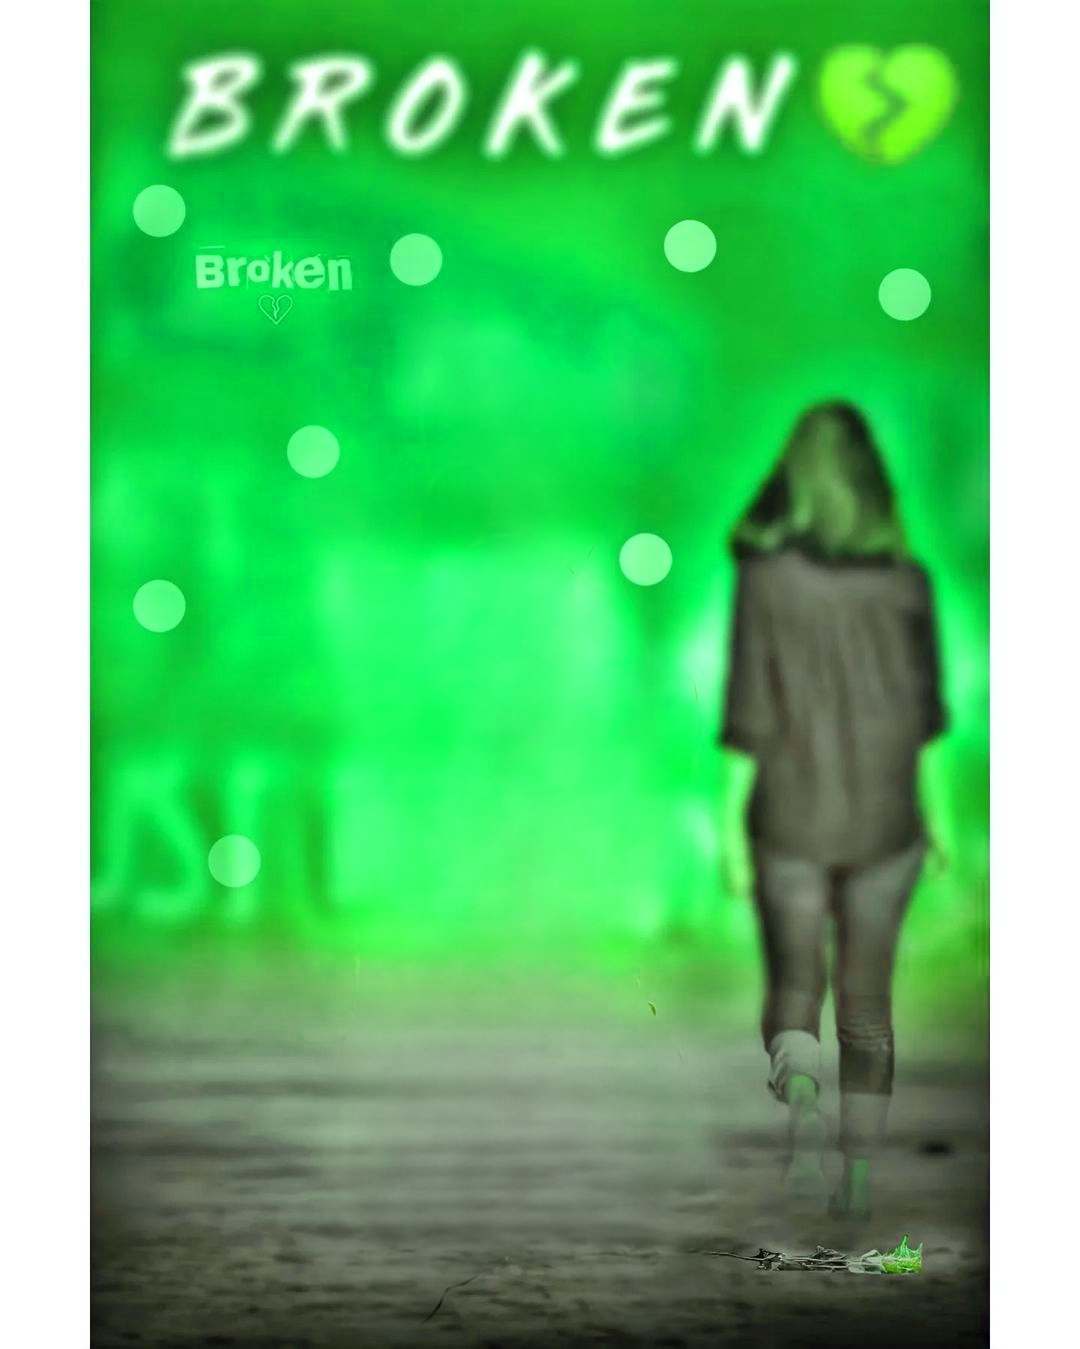 green colour CB editing background for broken heart